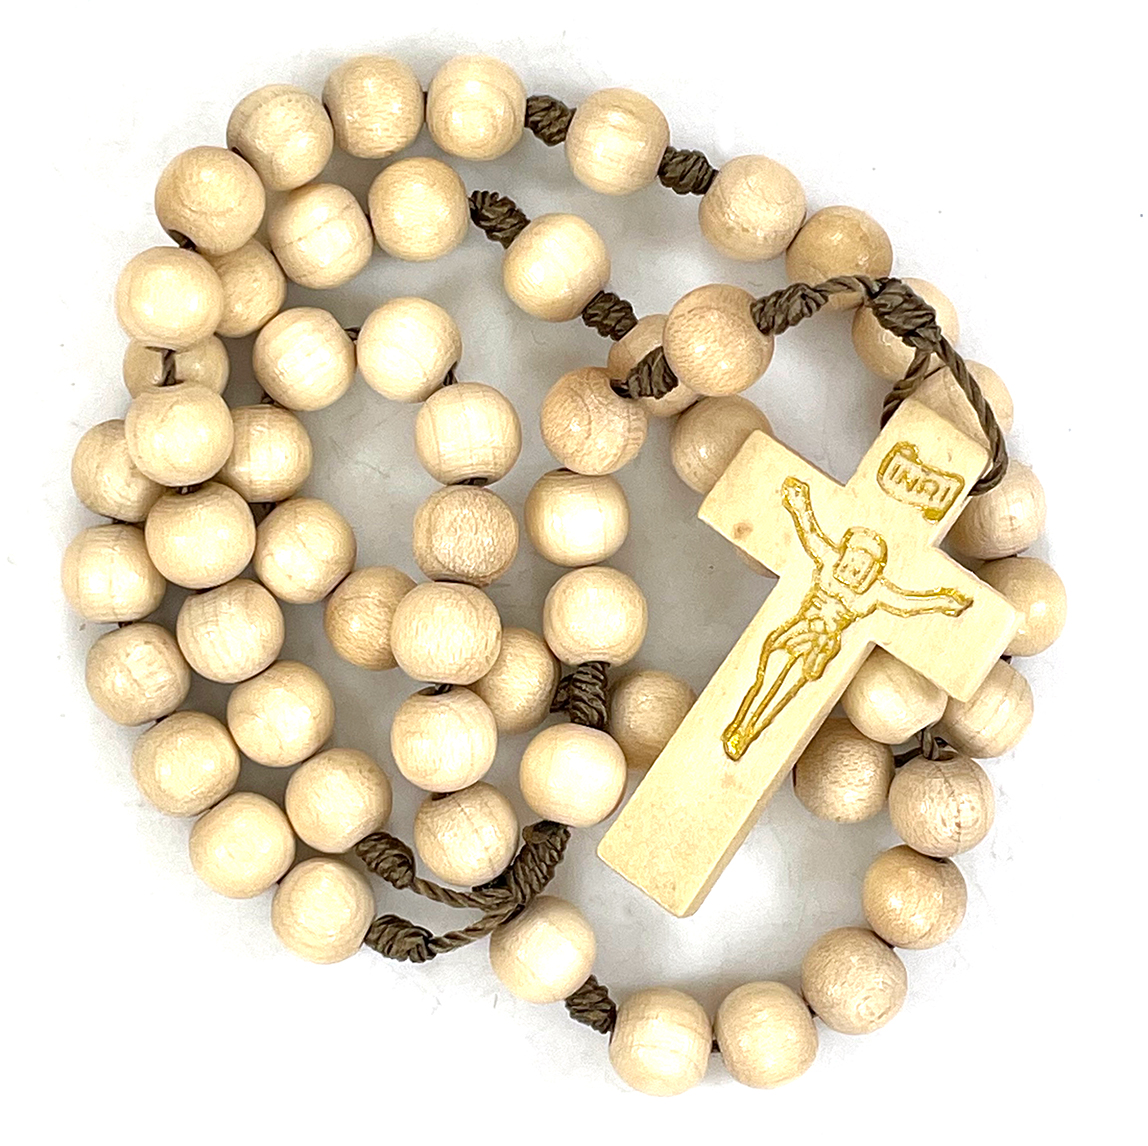 Basic Cord Rosary ($10.99 CAD)